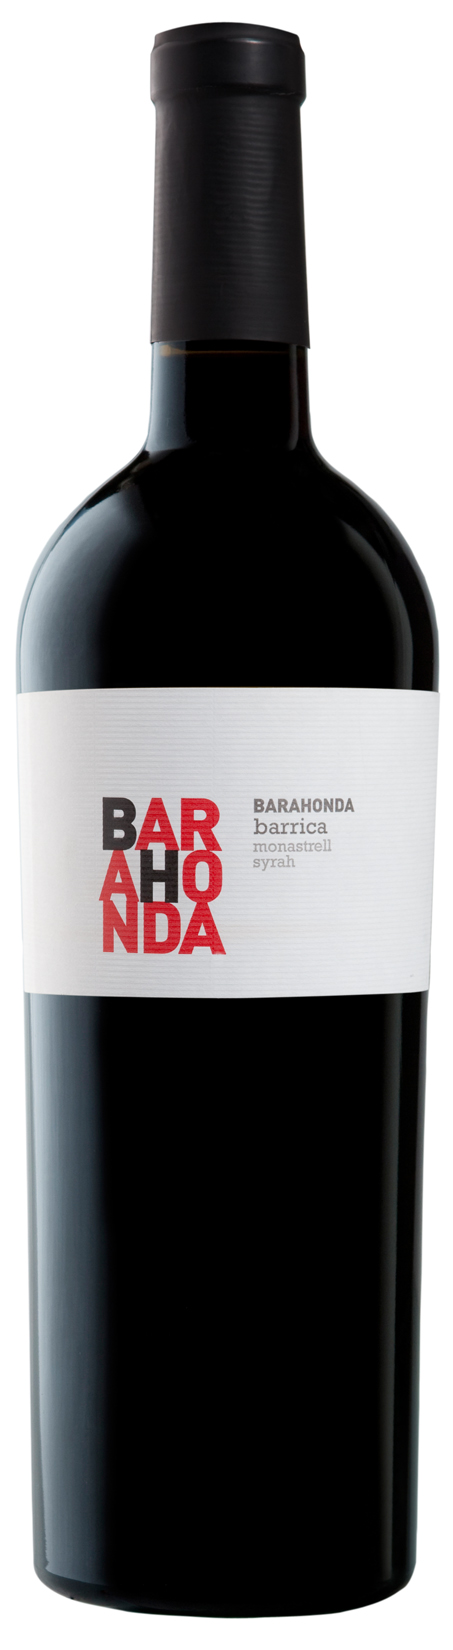 Image of Wine bottle Barahonda Barrica